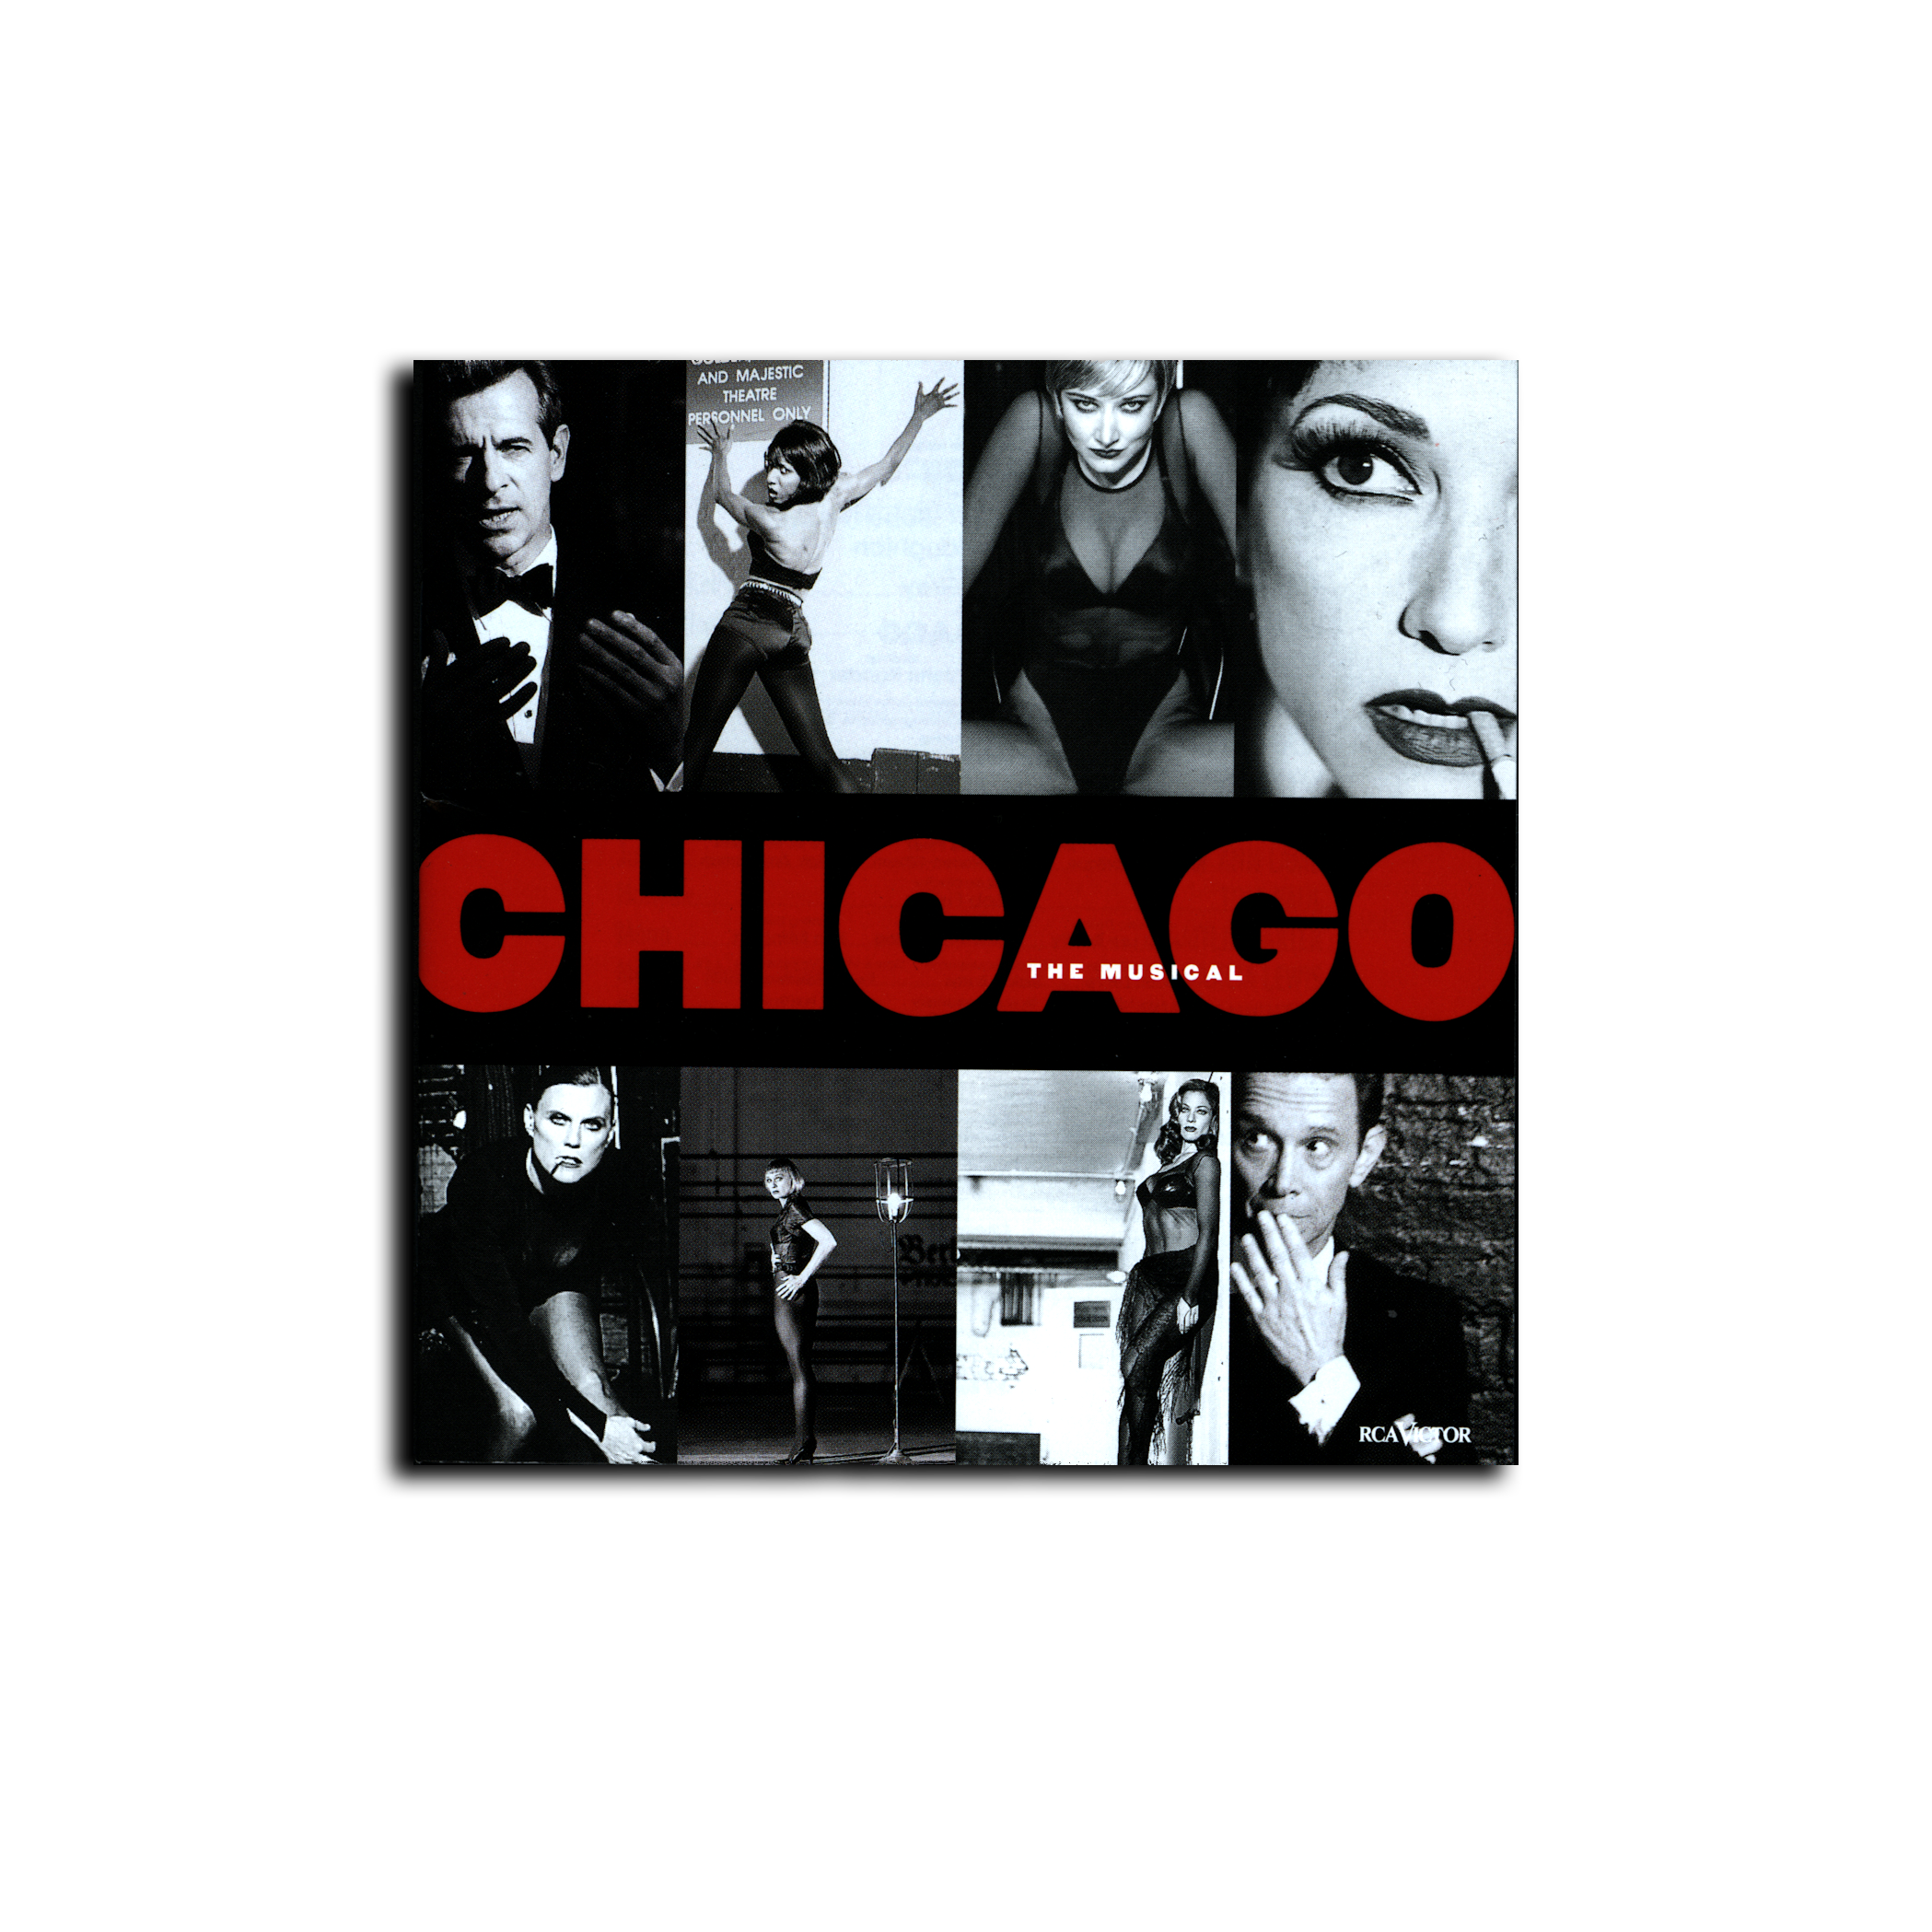 CHICAGO CD (1996 Broadway Revival Cast) Image